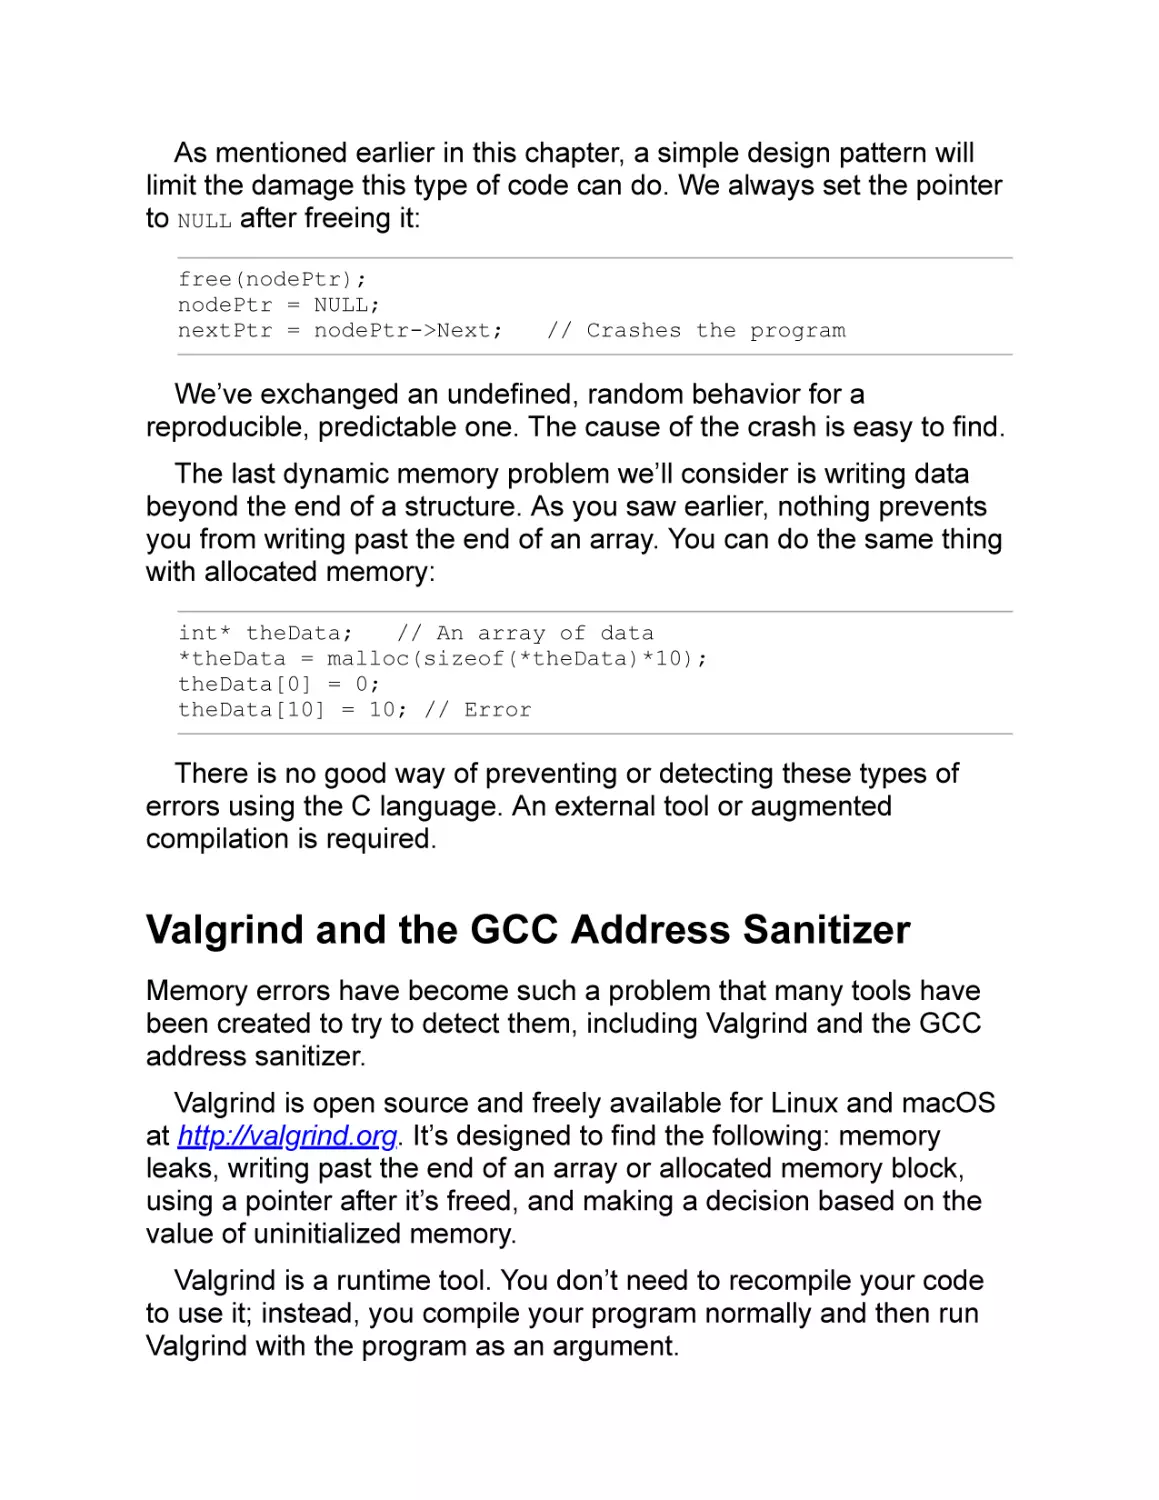 Valgrind and the GCC Address Sanitizer